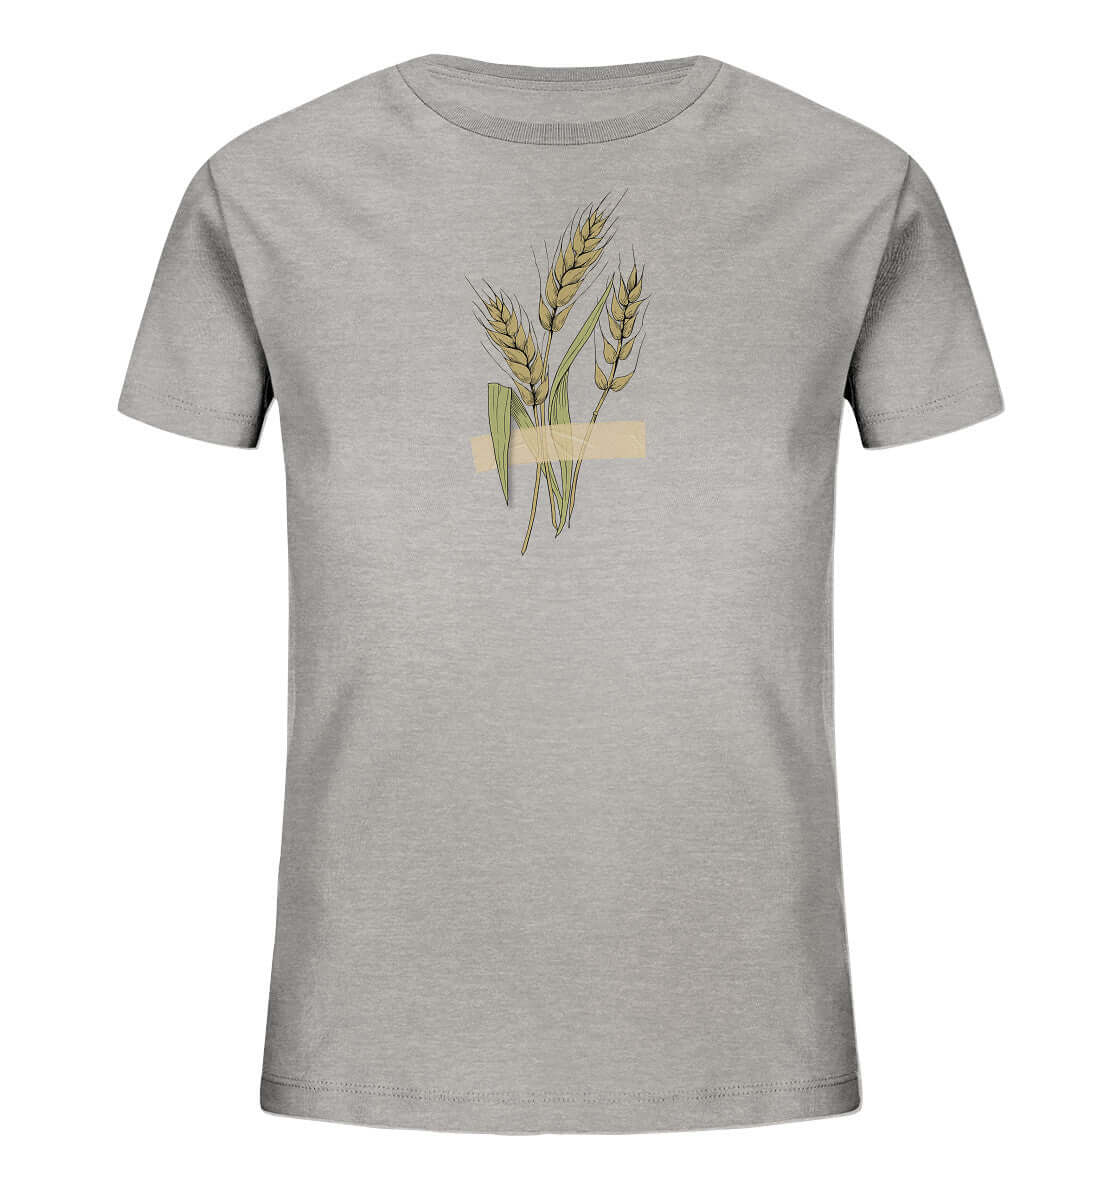 Kinder Shirt Ähre festgeklebt Agrar Acker Weizen Landwirt Shirt Landwirtschaft Dorfkram®